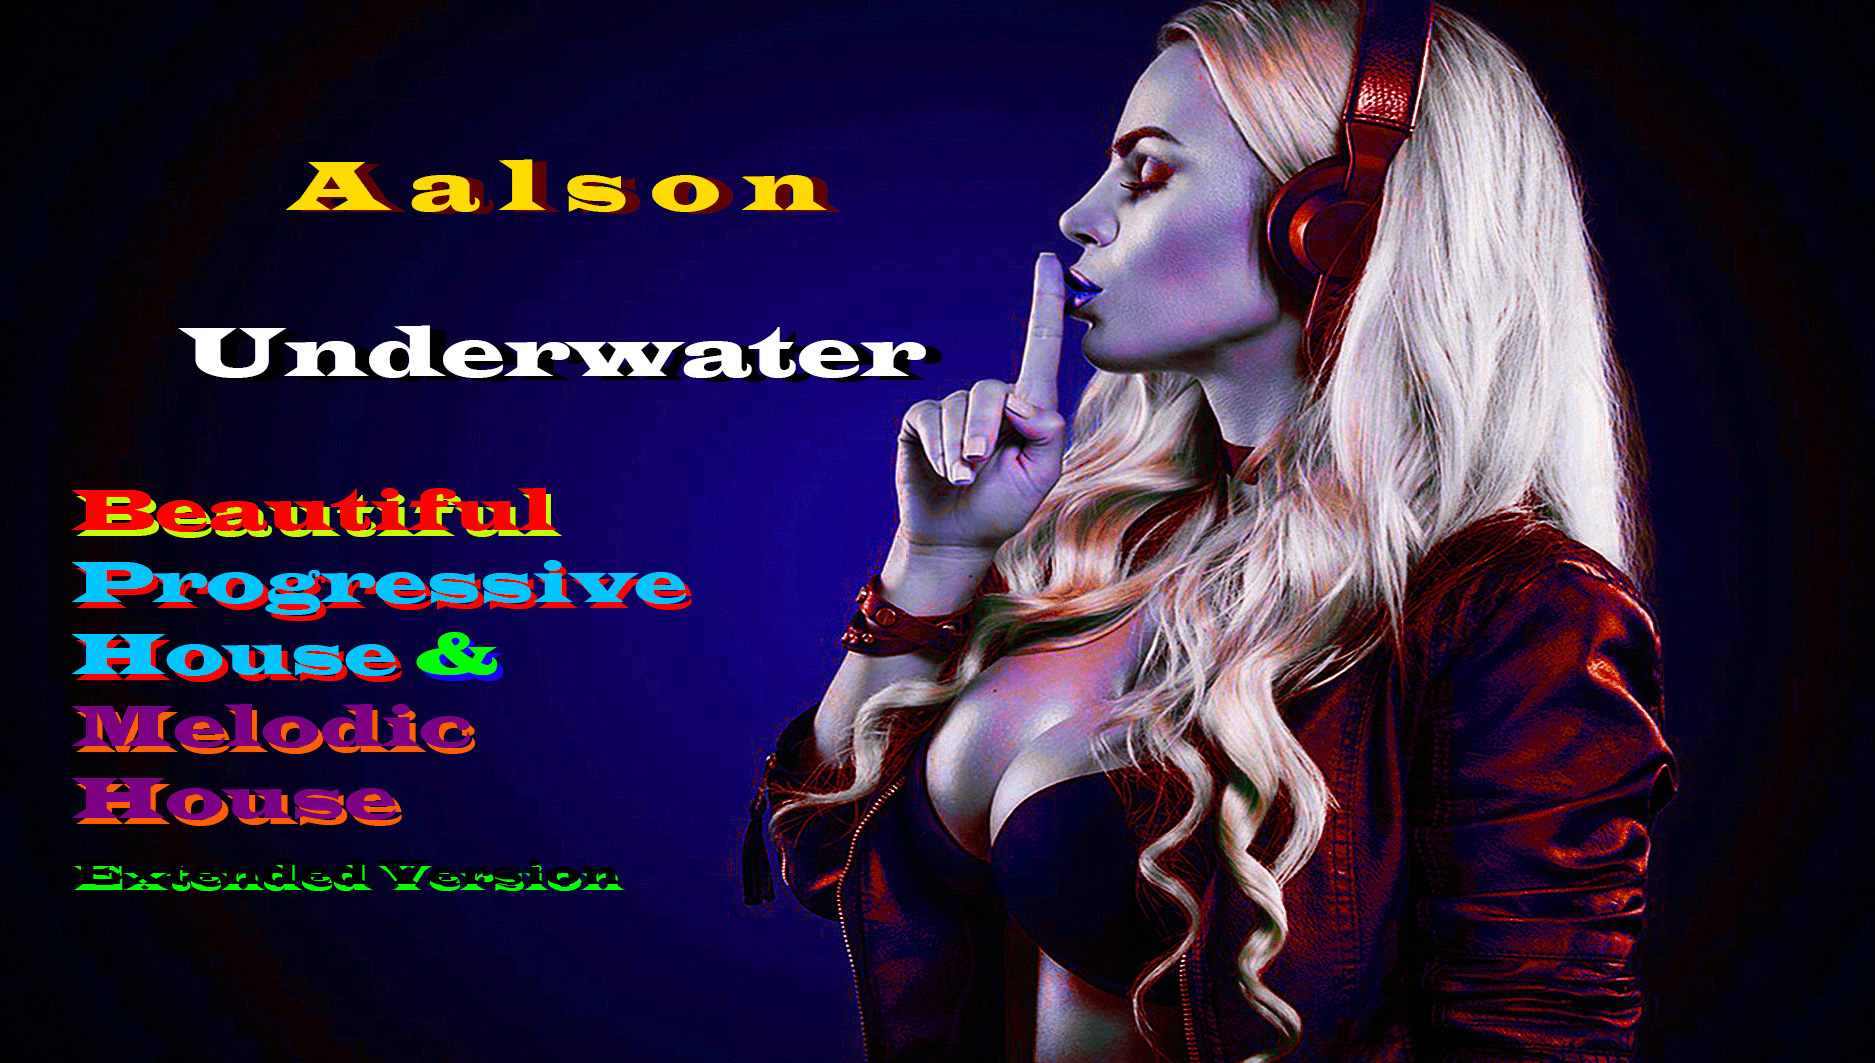 Aalson-Underwater(Melodic Techno,Melodic House,Extended version)Мелодик Техно,Мелодик Хаус, #22 .mp4